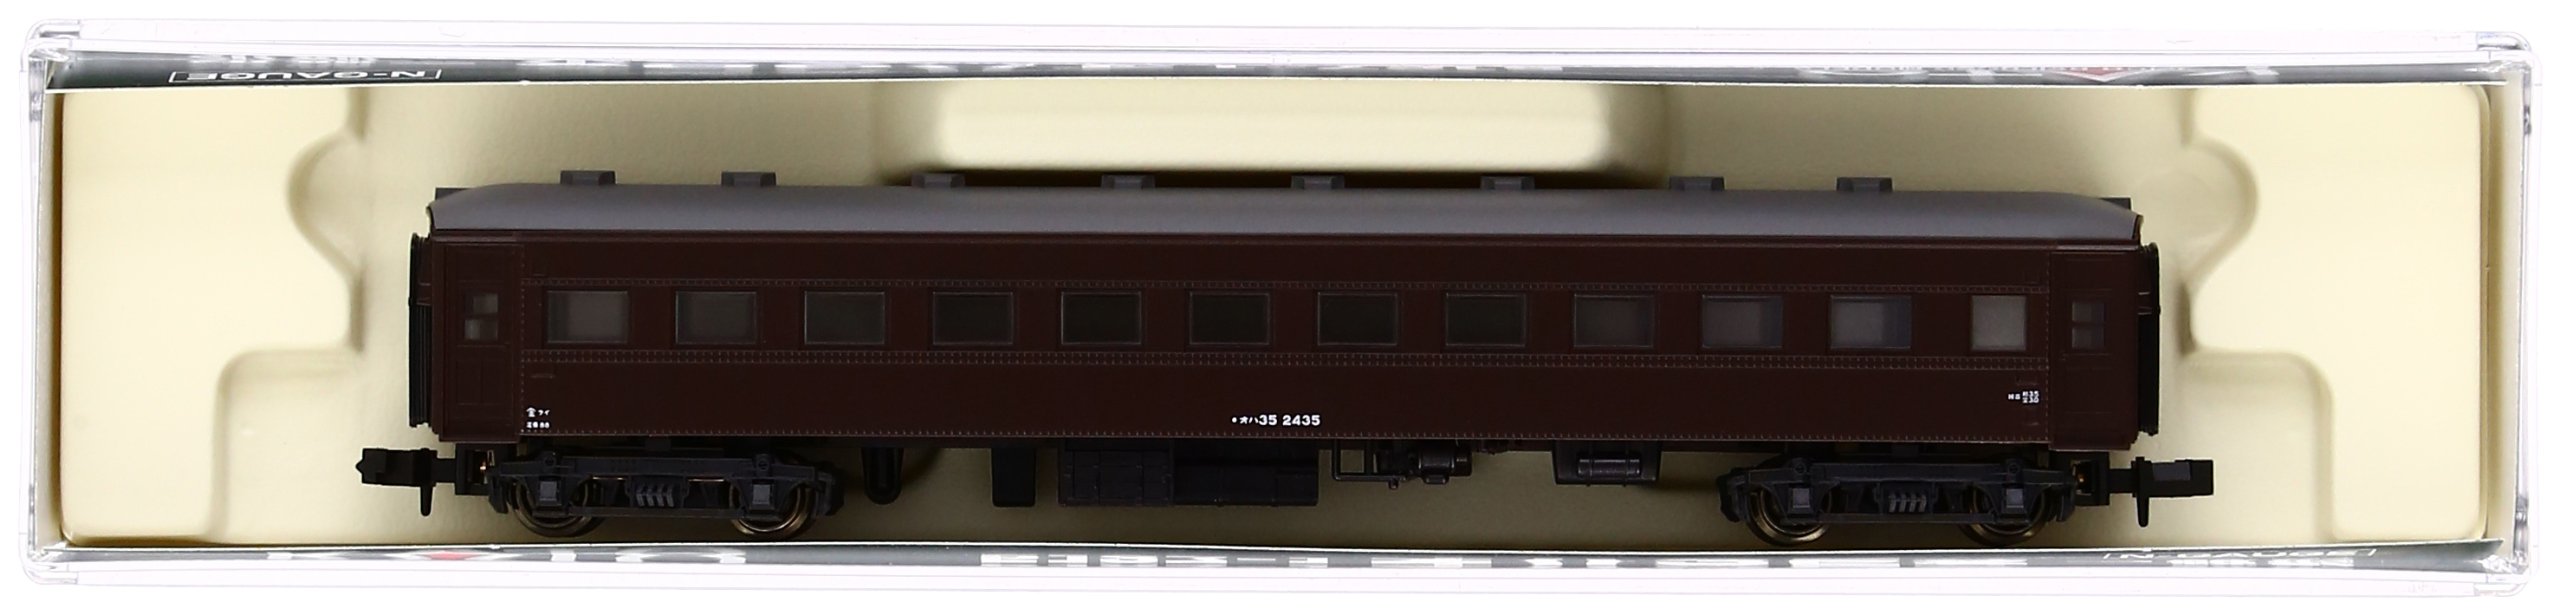 Kato N Gauge 5127-1 Brown Railway Model Passenger Car - General Type Oha35